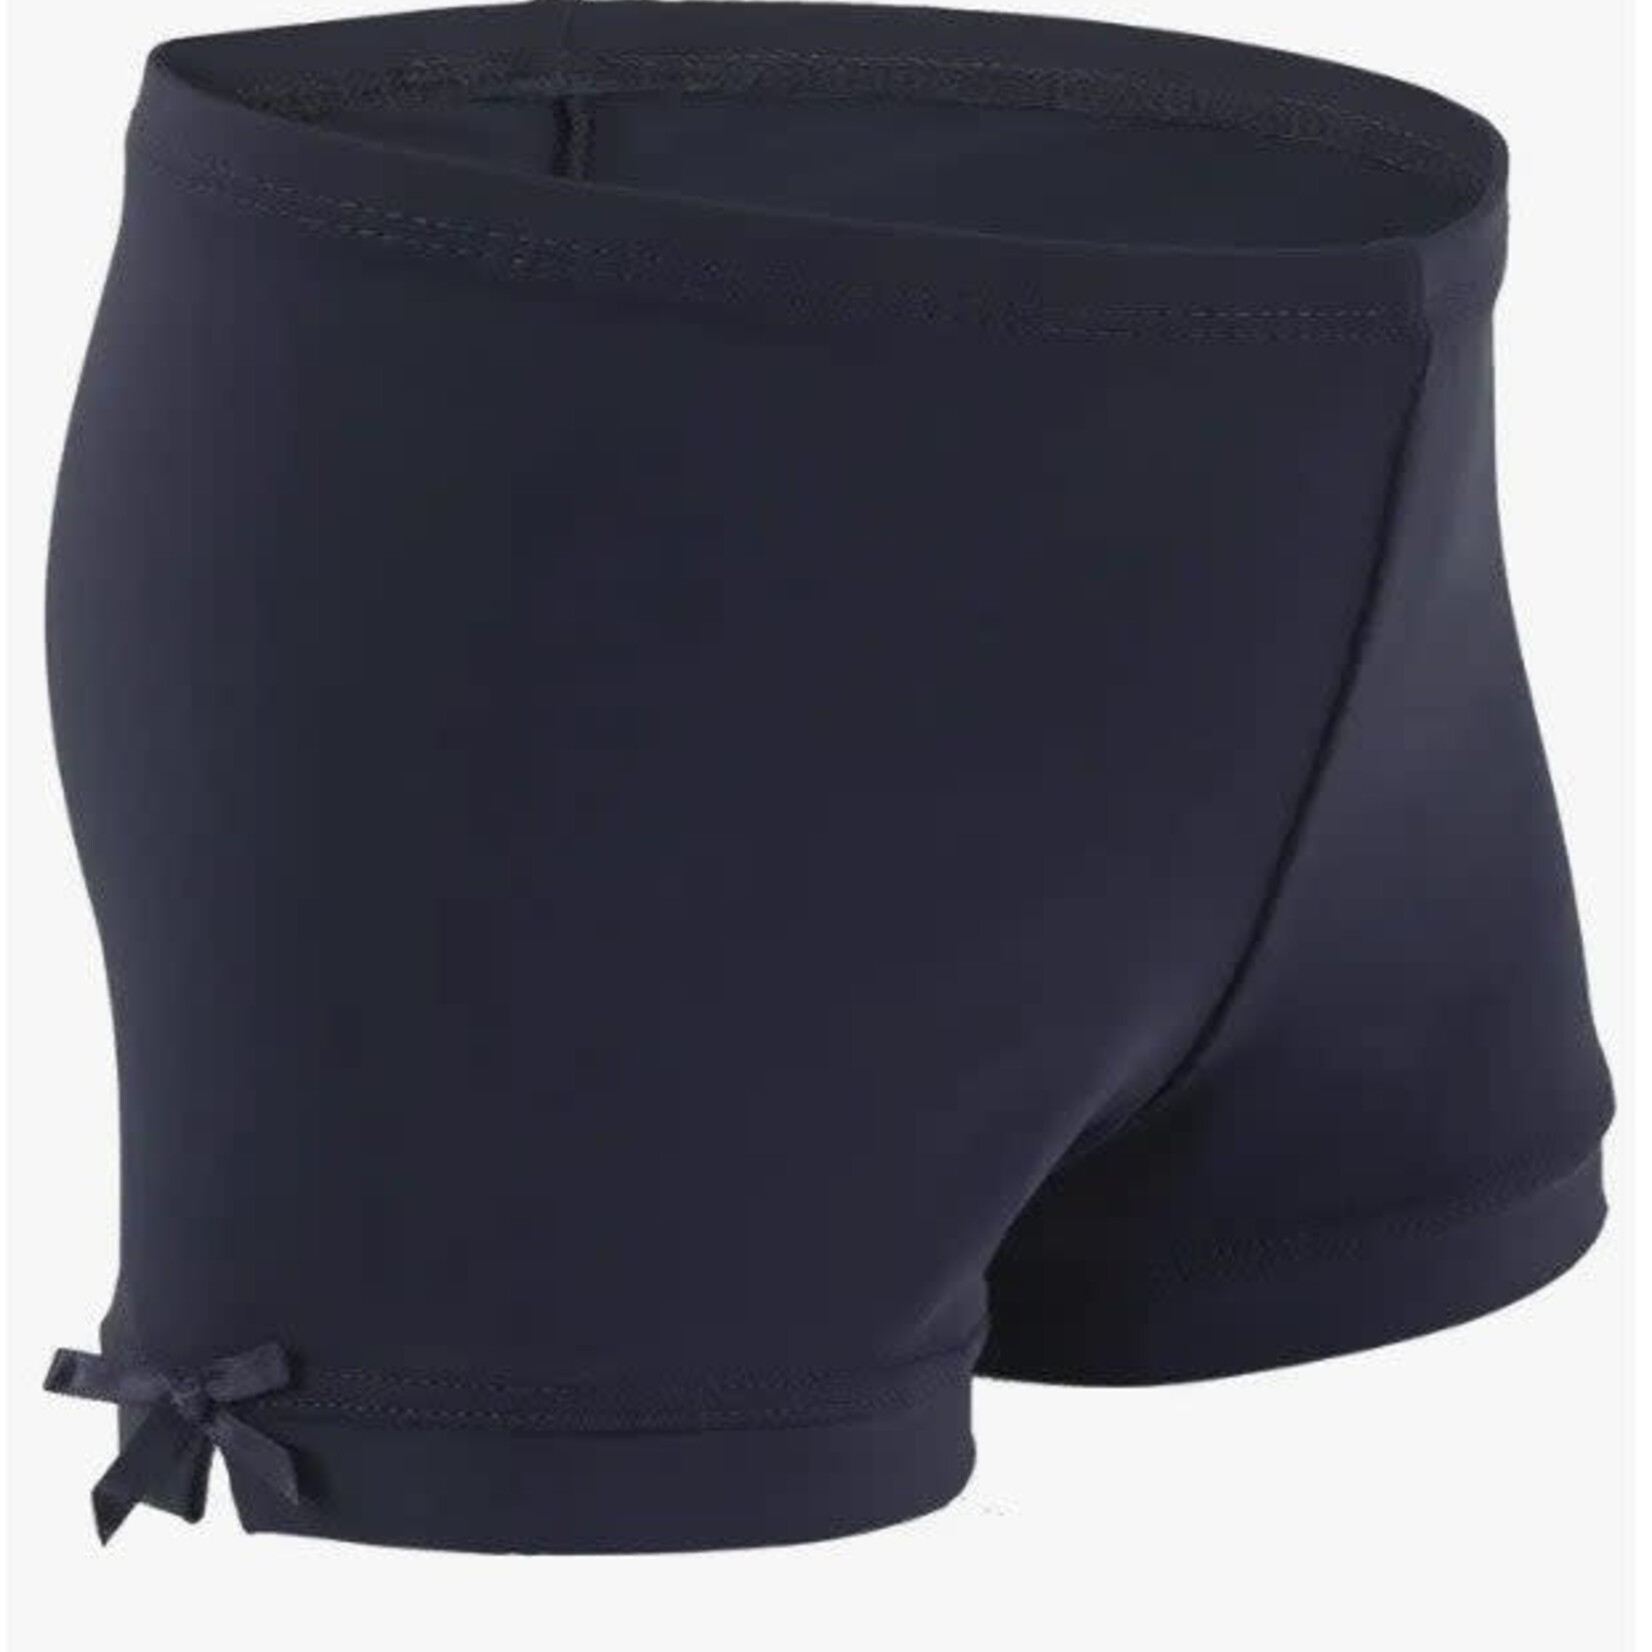 https://cdn.shoplightspeed.com/shops/668107/files/56830039/1652x1652x1/monkeybar-buddies-girls-navy-spandex-shorts.jpg